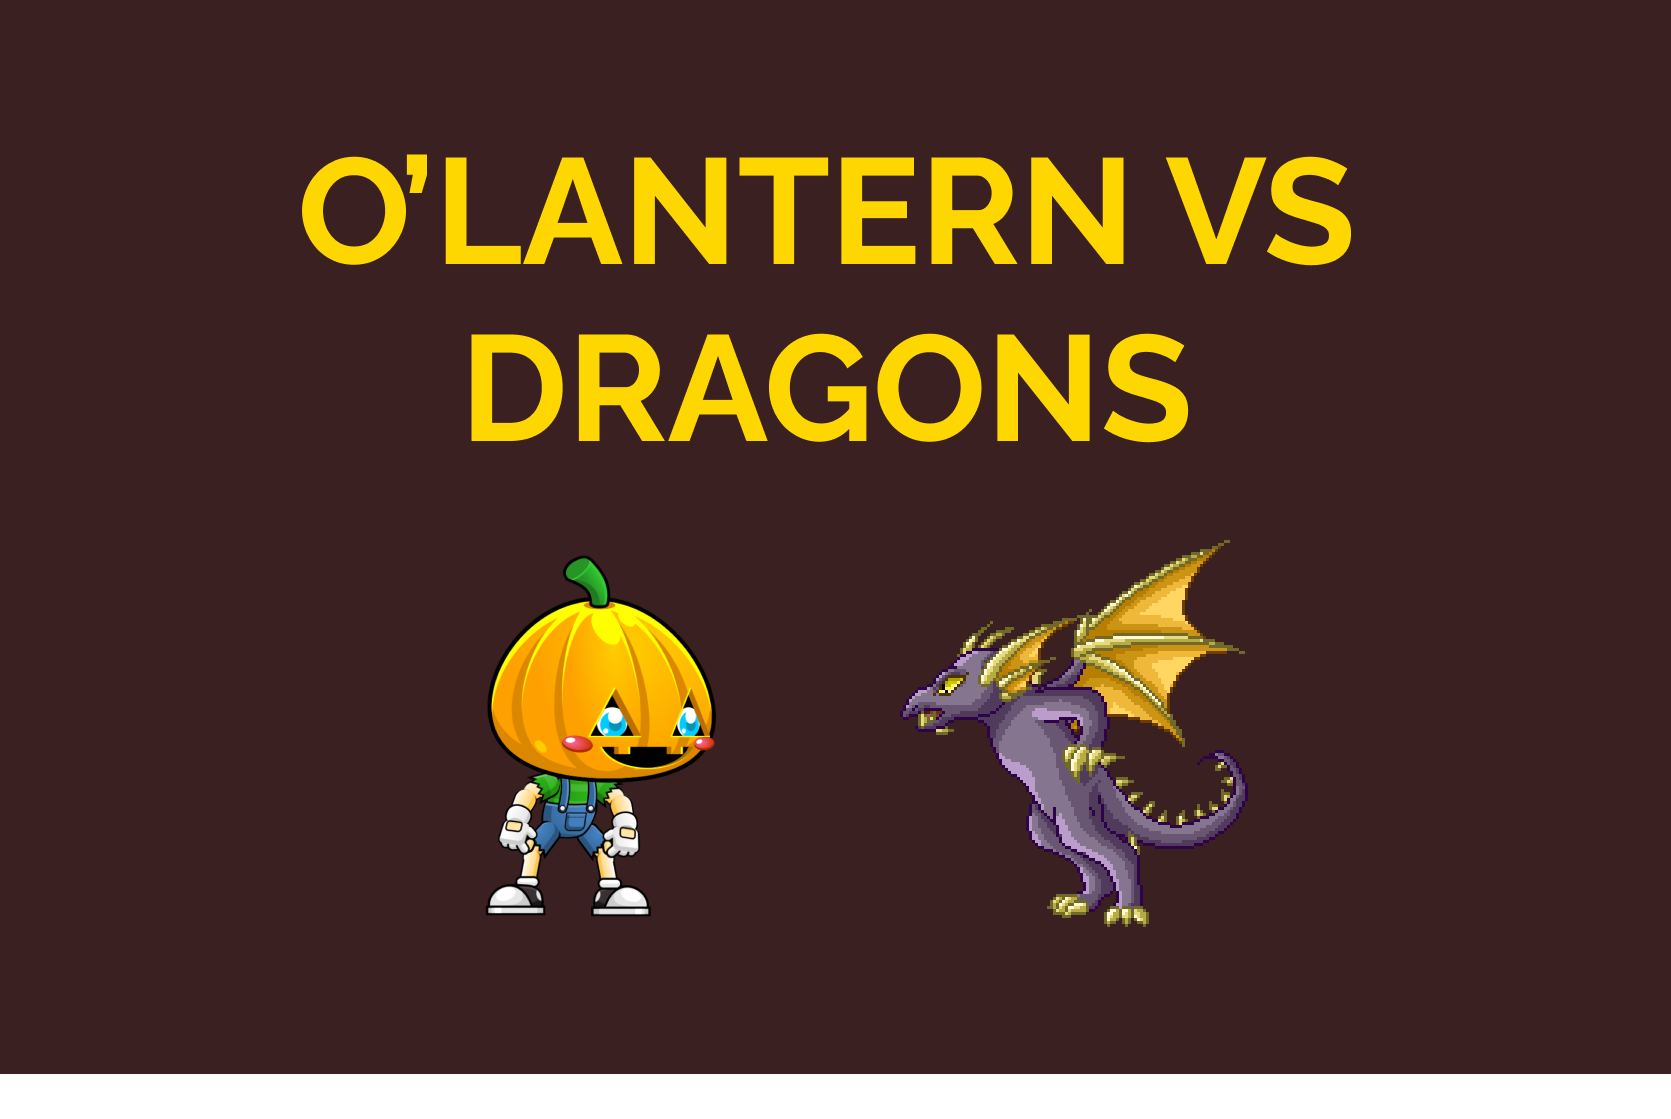 O'Lantern vs Dragons